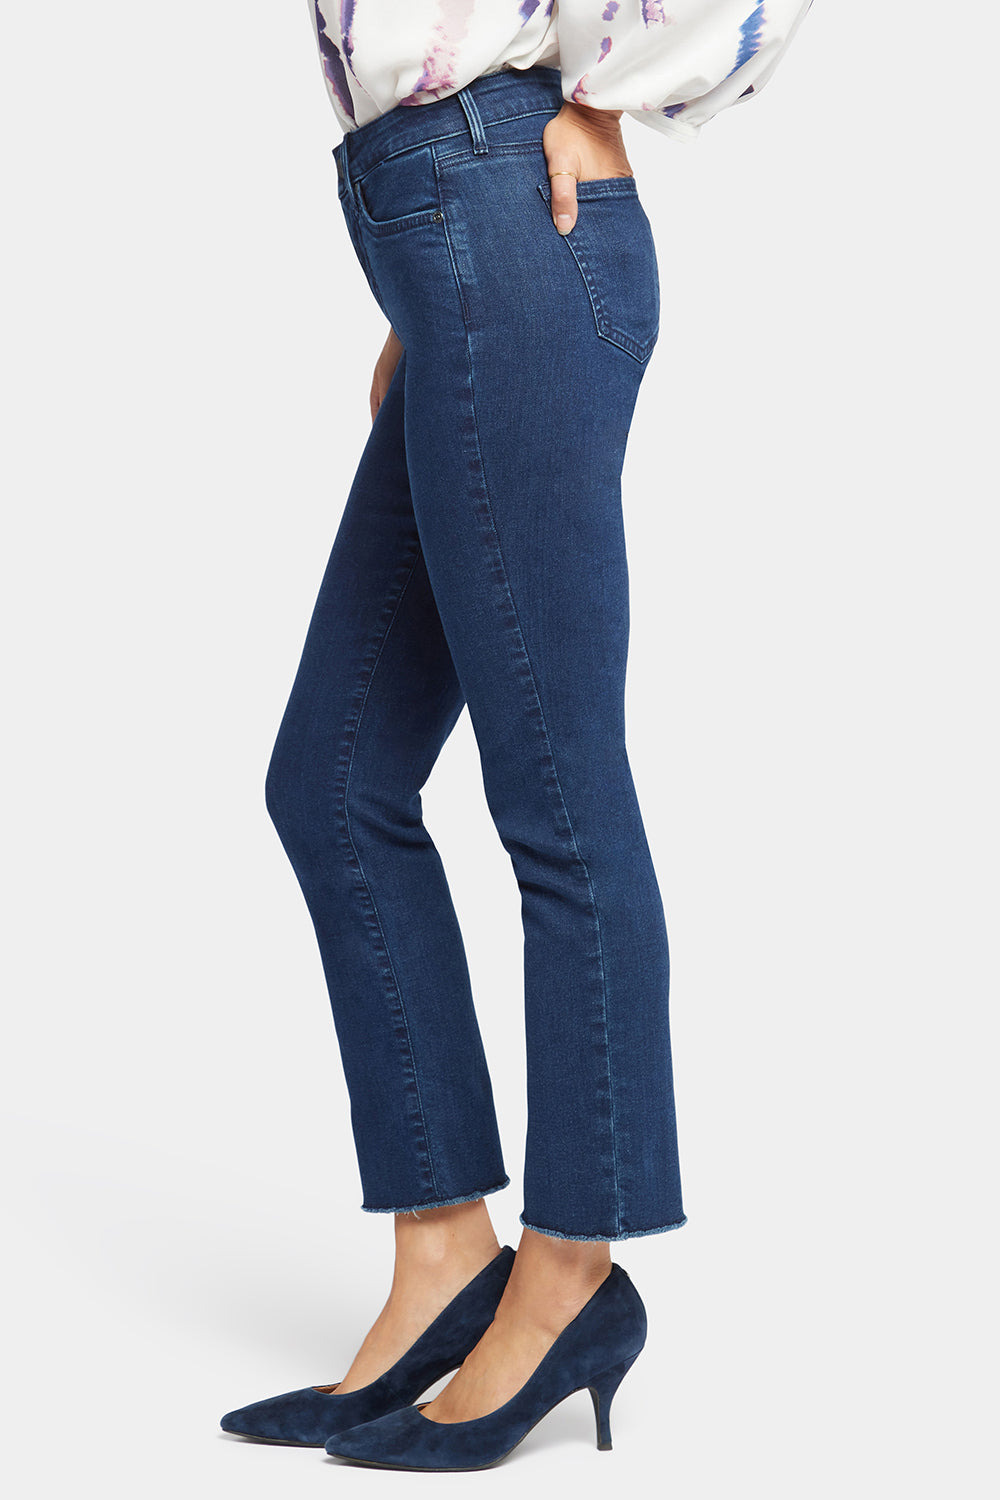 NYDJ Sheri Slim Ankle Jeans With Frayed Hems - Mystique